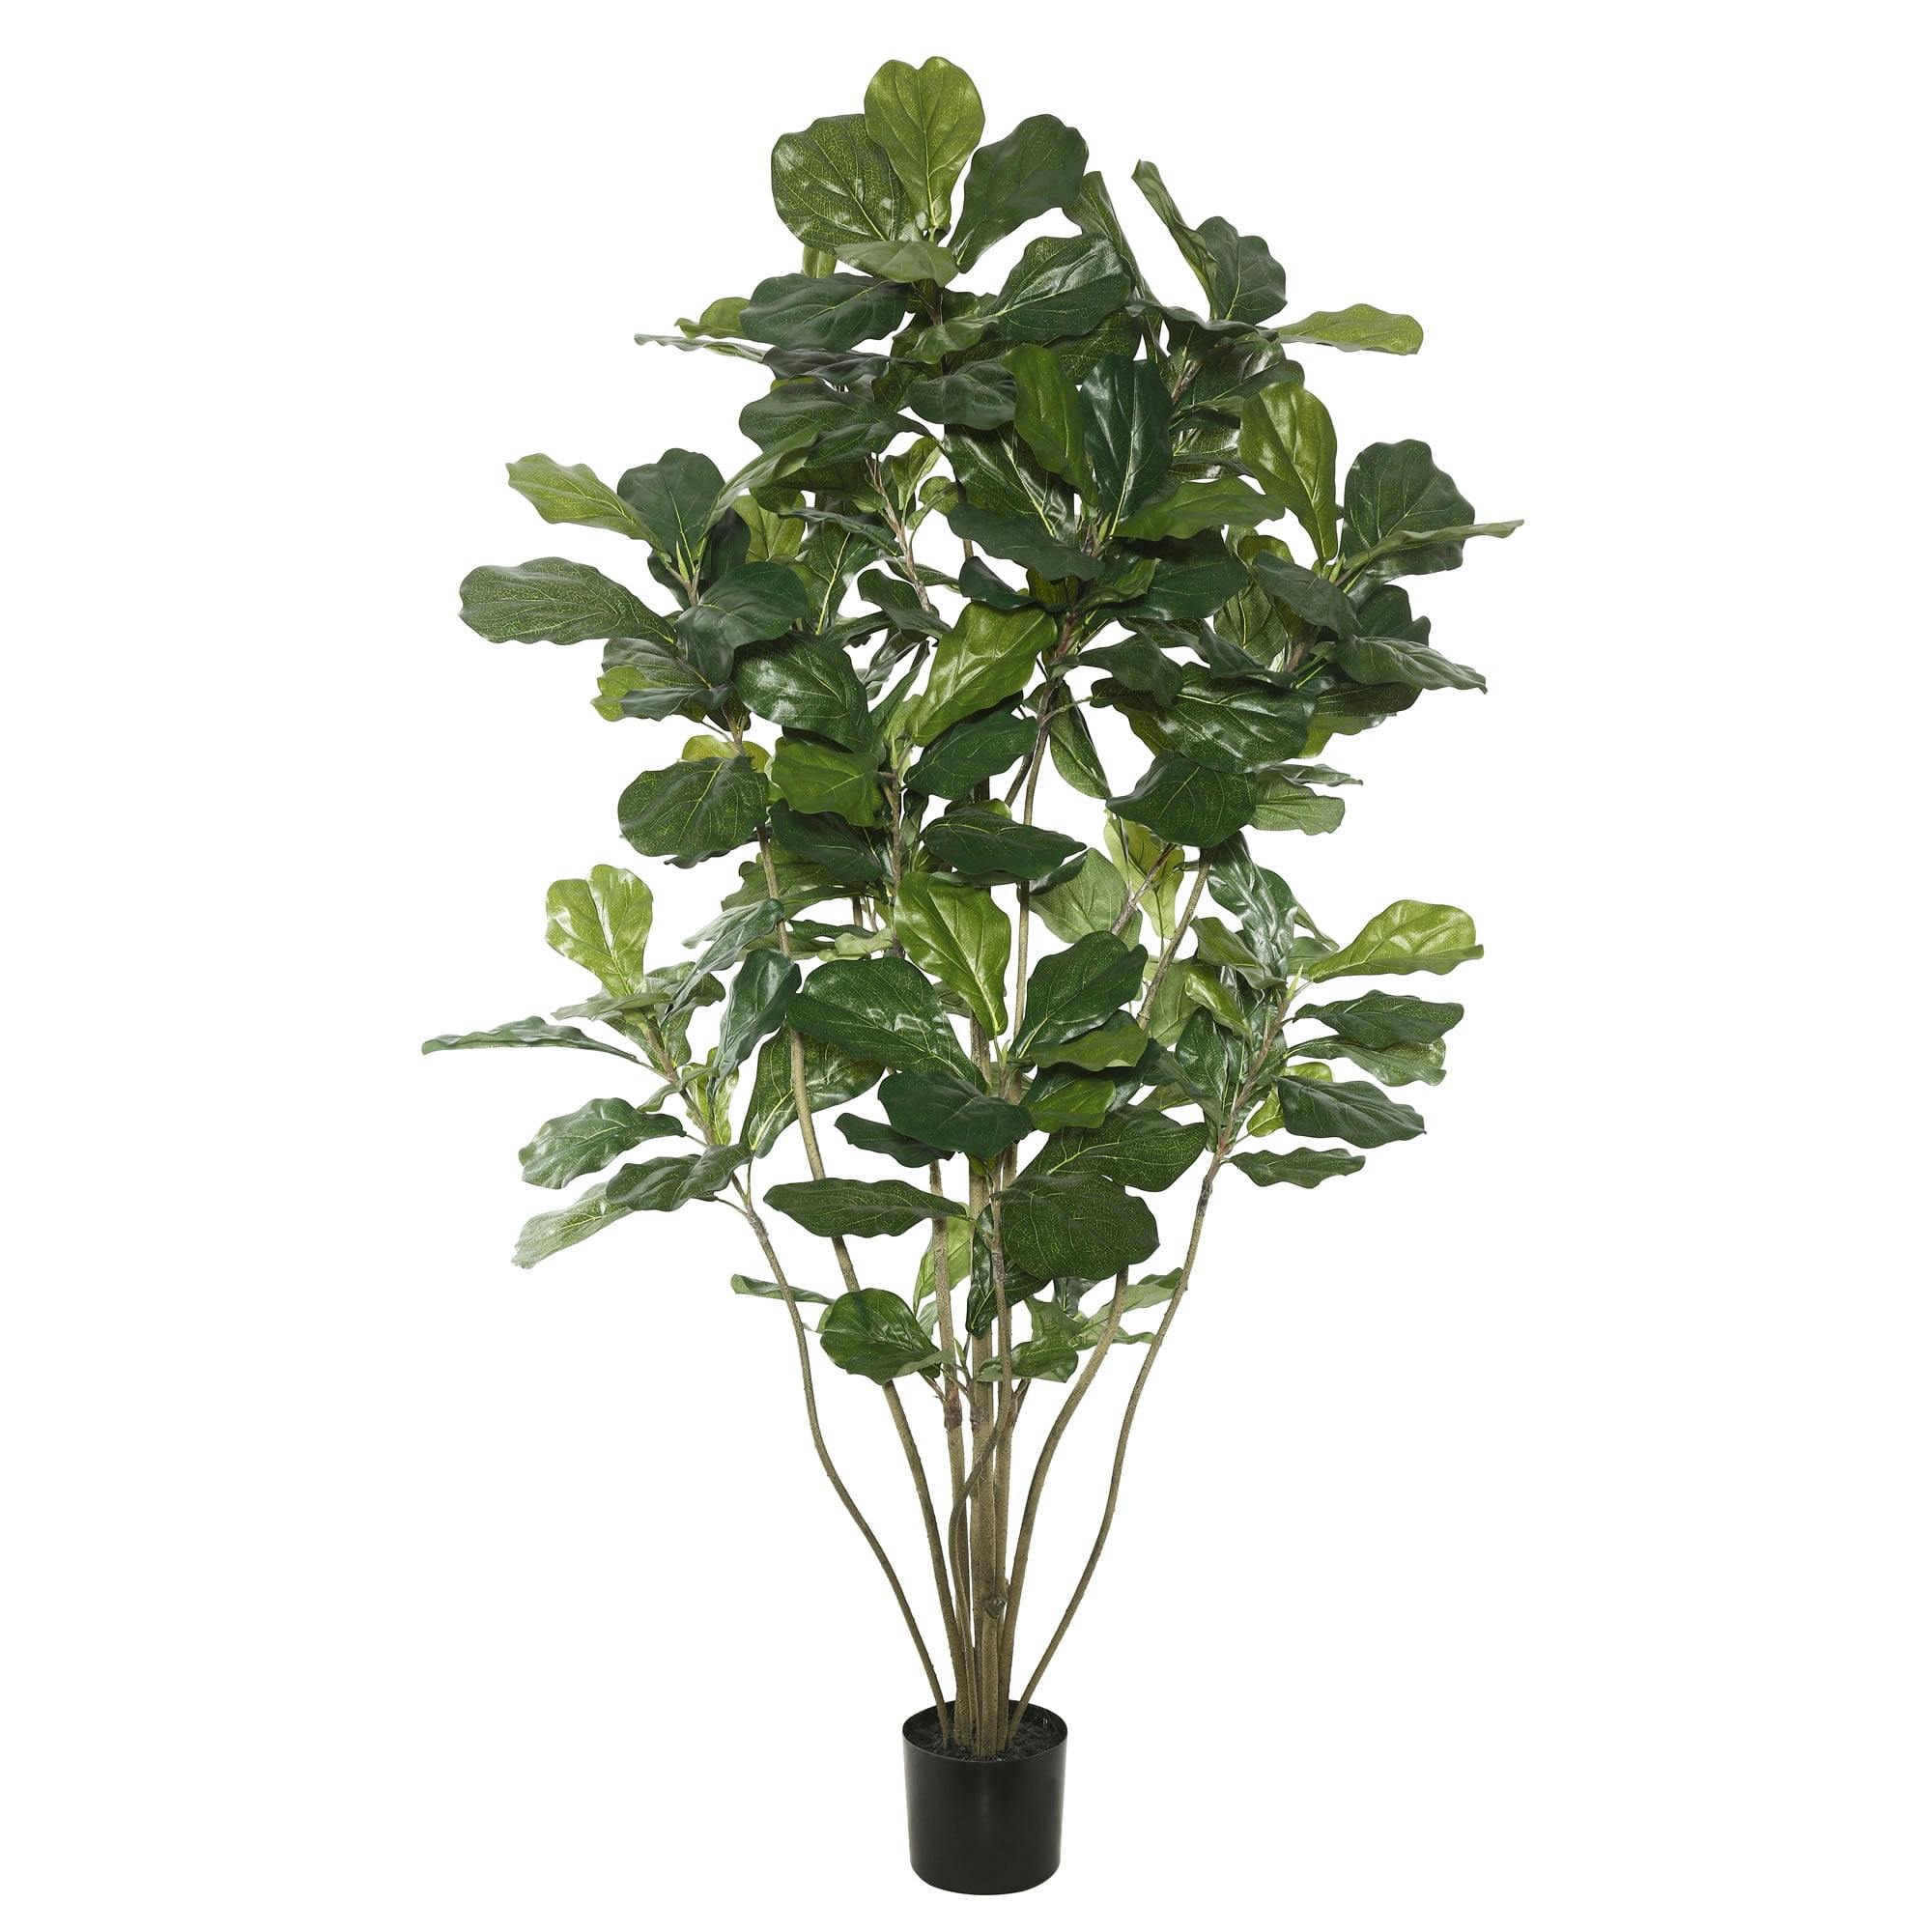 Lush Green 6' Silk & Plastic Potted Fiddle Leaf Fig Tree